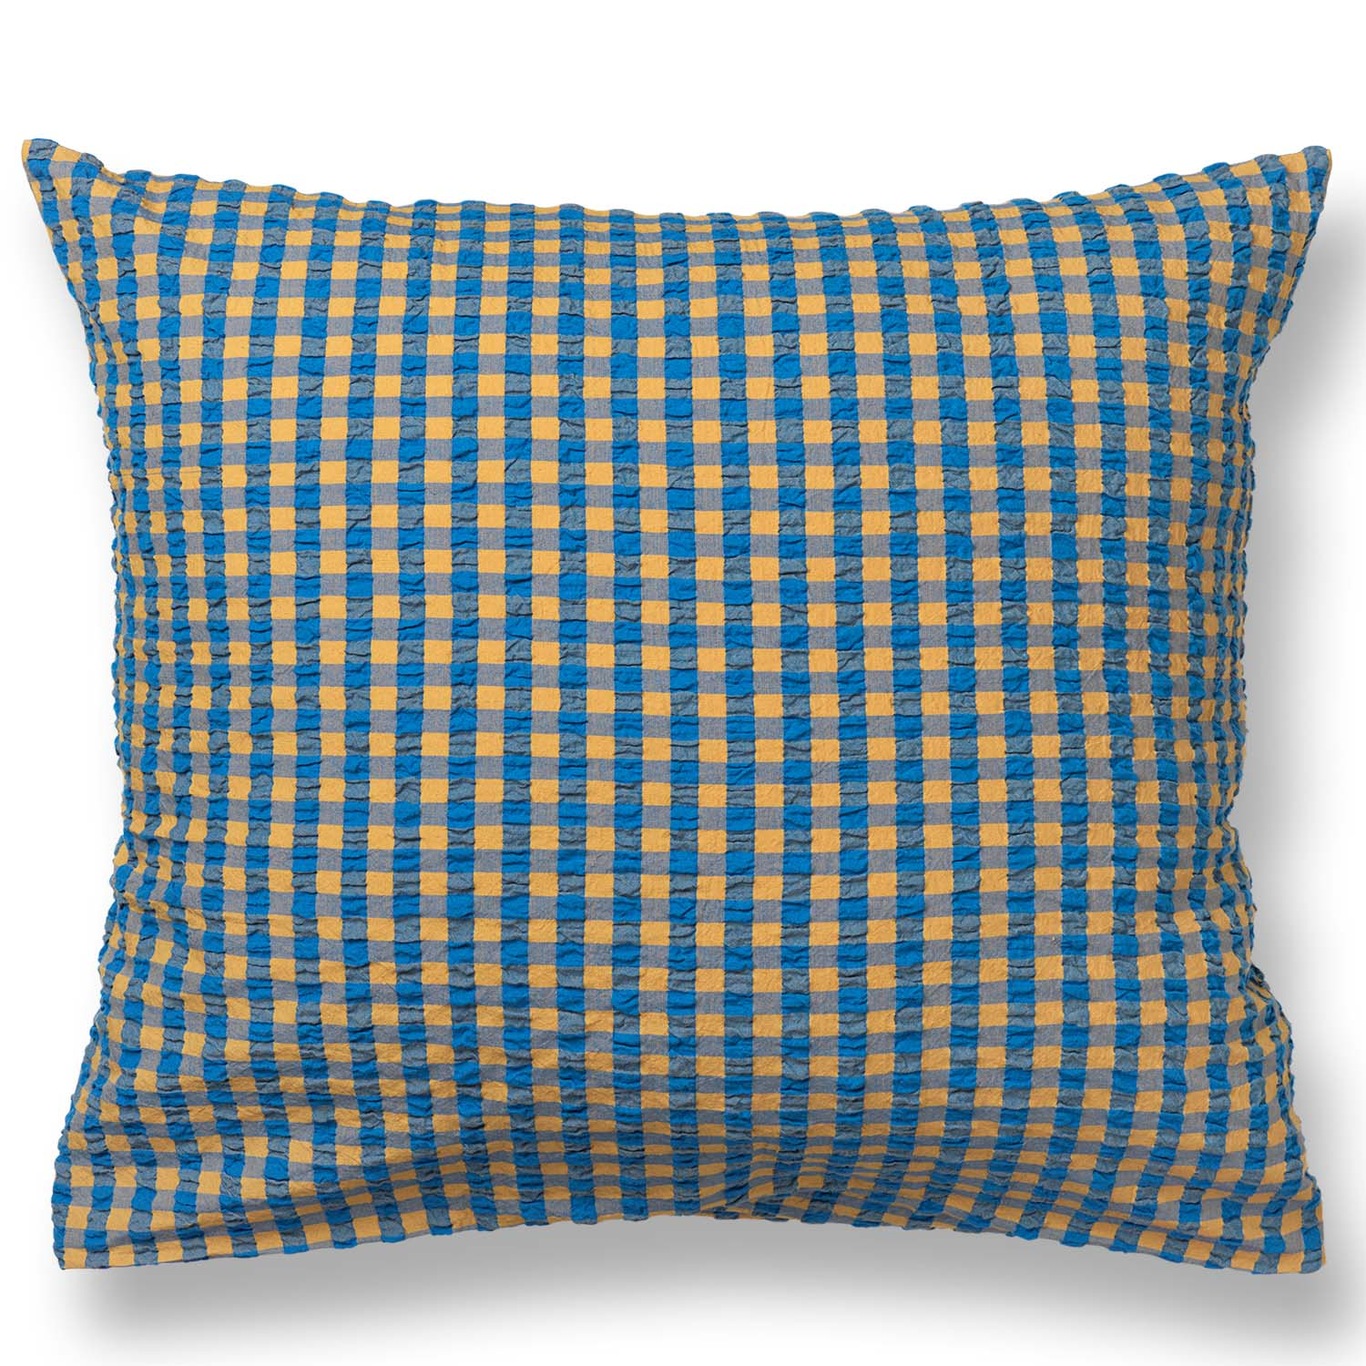 Bæk & Bølge Pillowcase 50x60 cm, Blue/Ochre